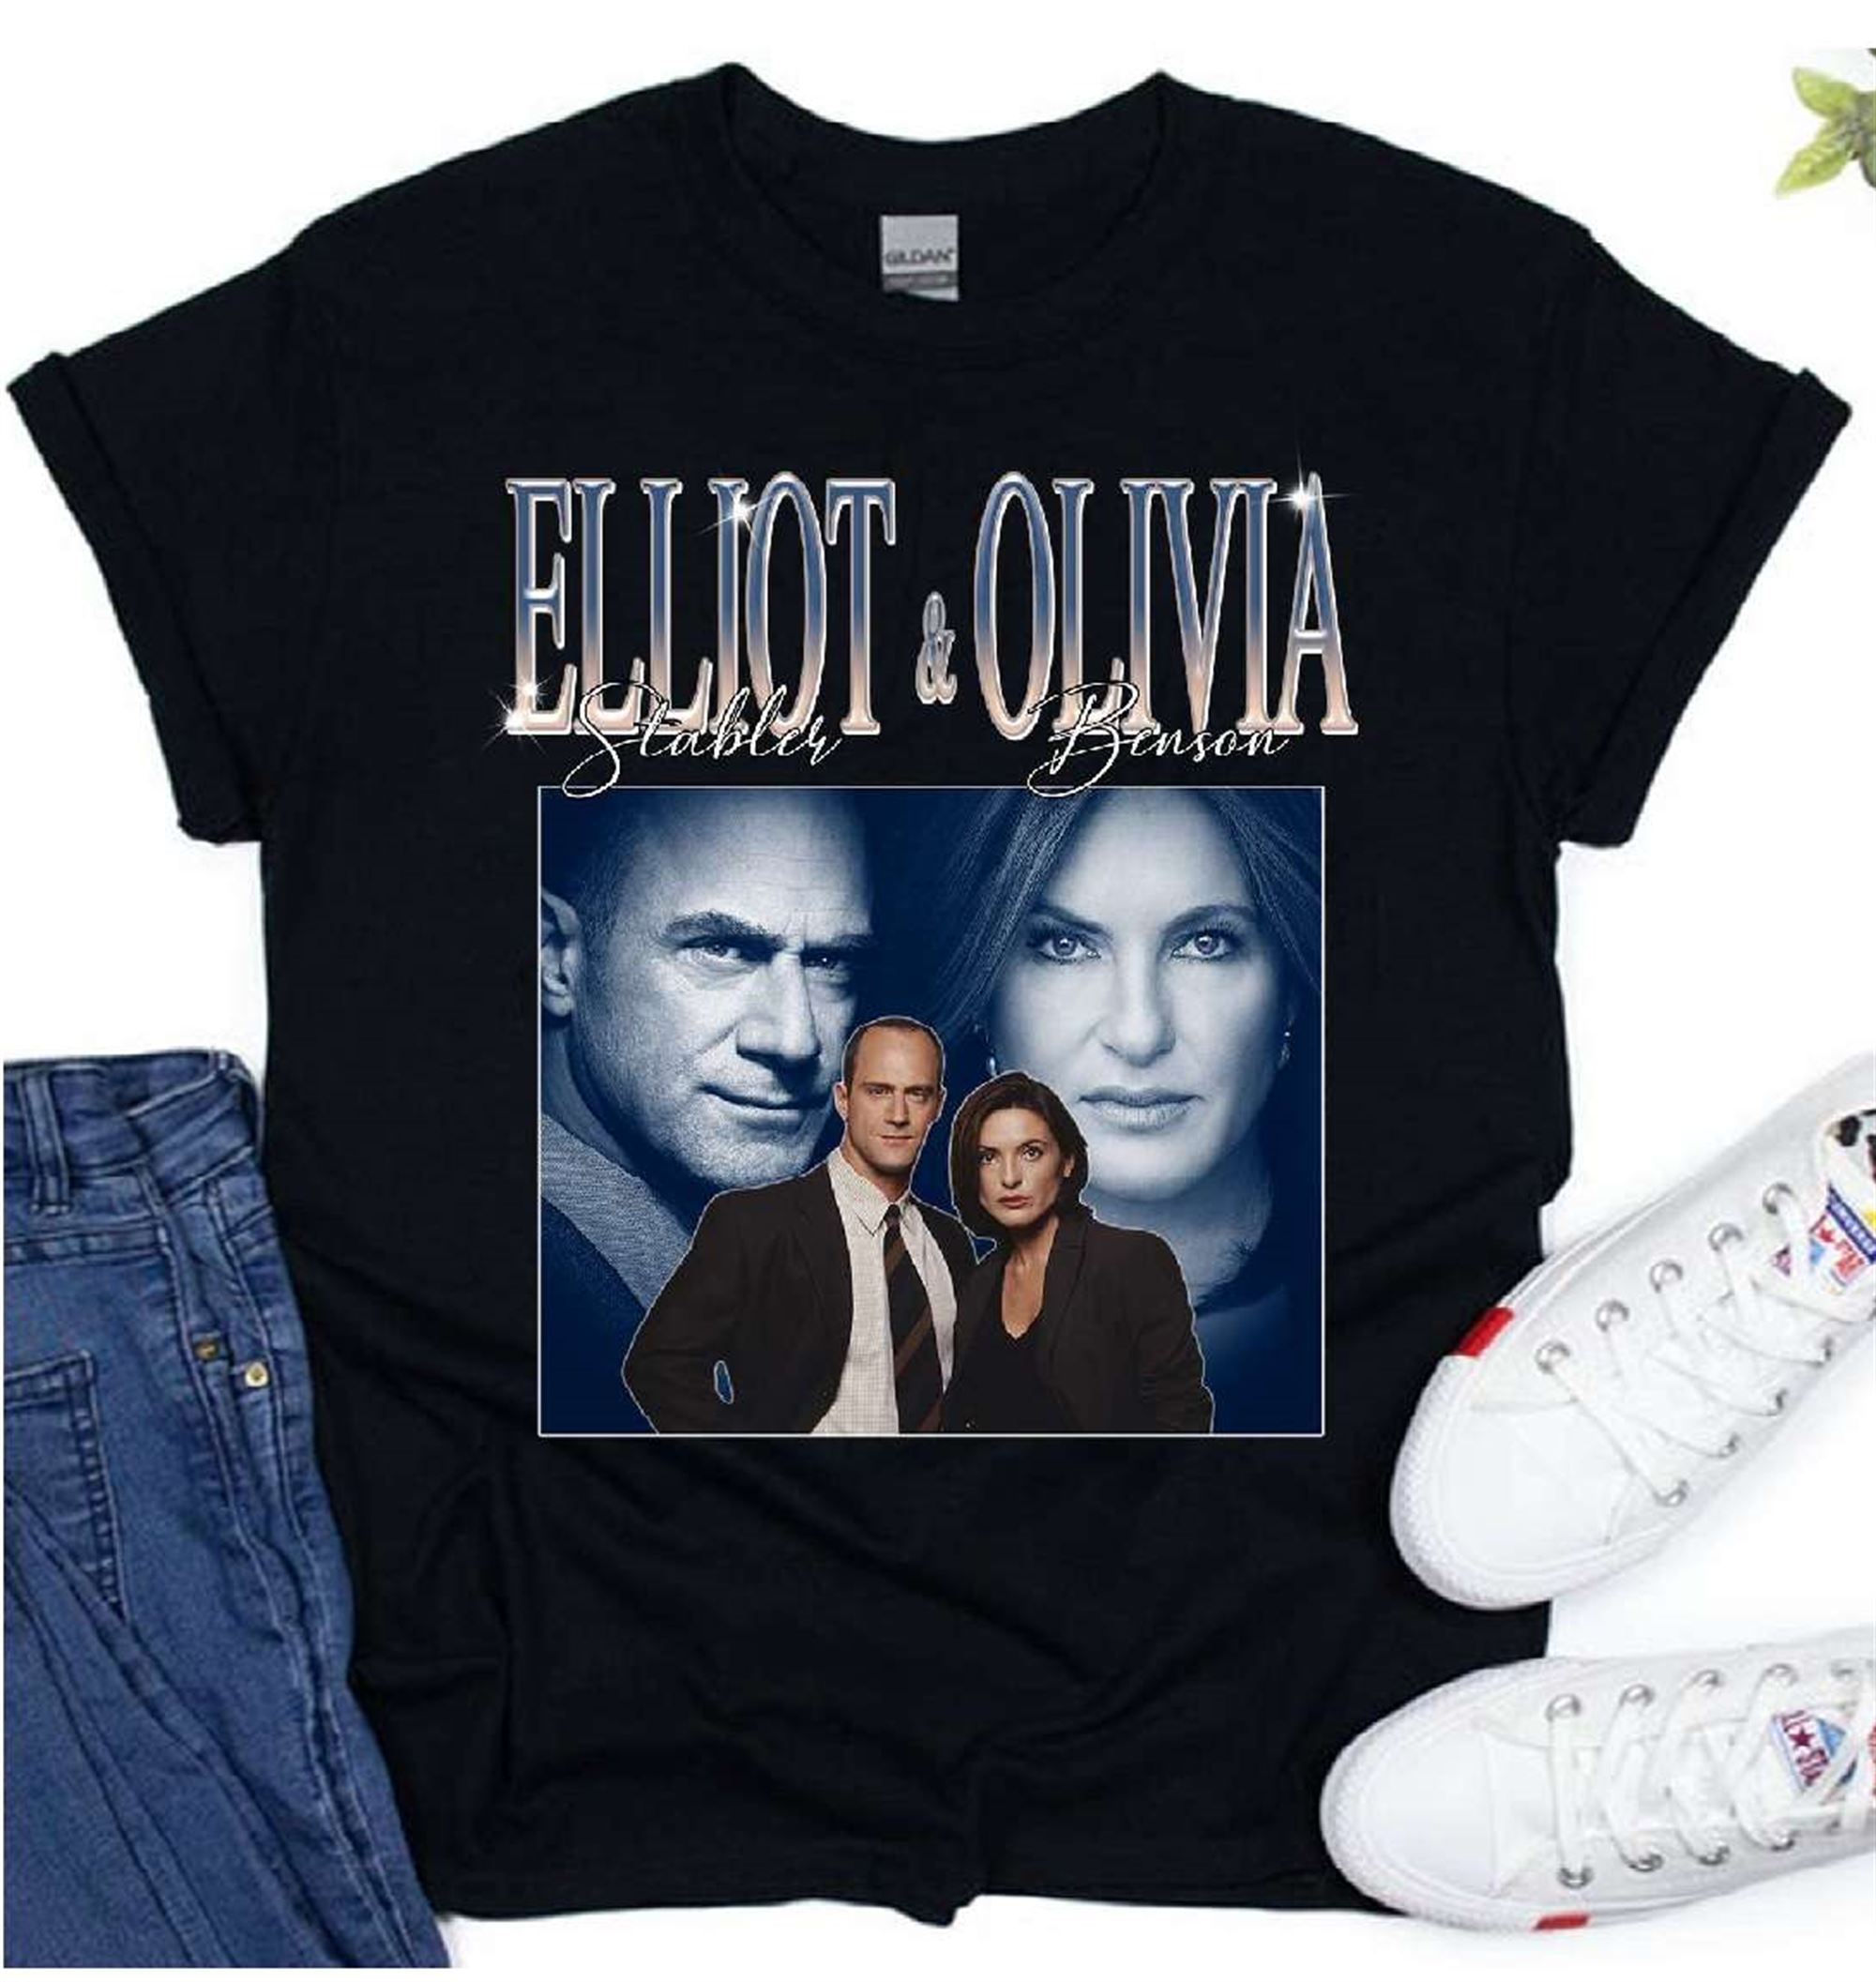 Elliot Stabler And Olivia Benson Vintage Retro Style Rap Music Hip Hop T Shirt Size Up To 5xl